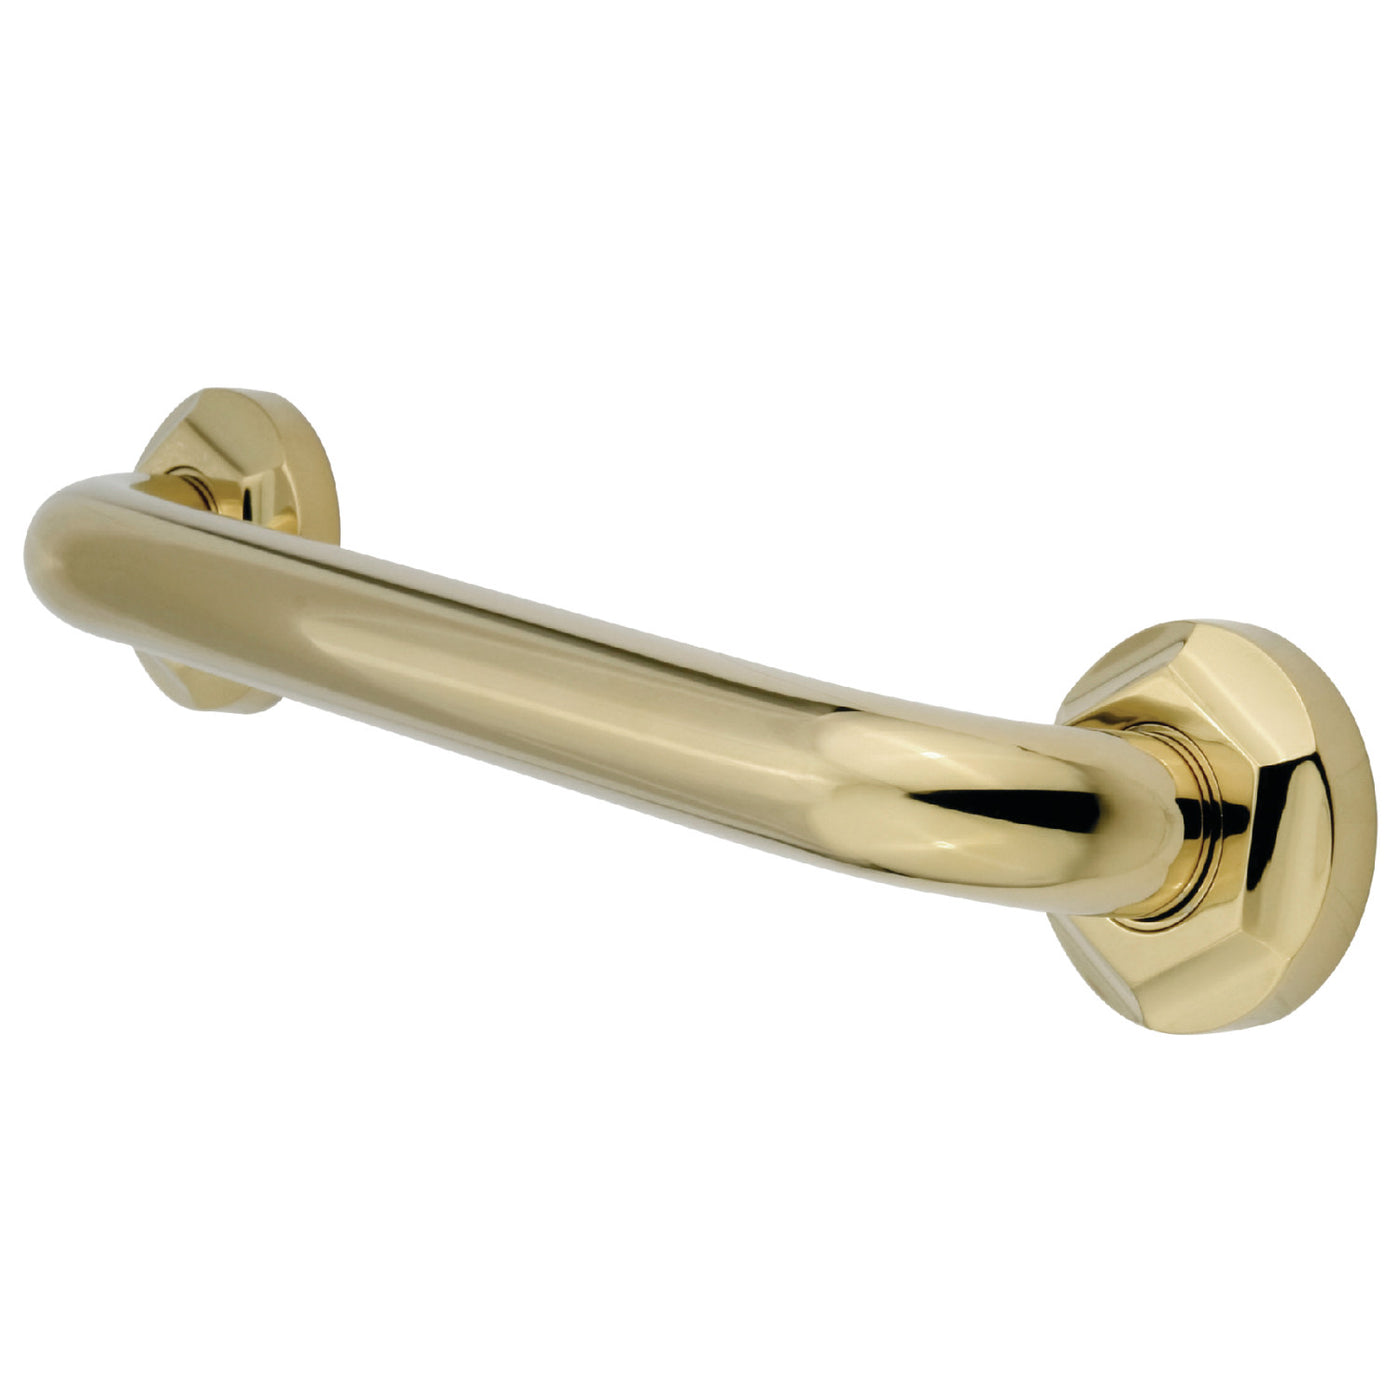 Elements of Design EDR714162 16-Inch x 1-1/4-Inch O.D Grab Bar, Polished Brass